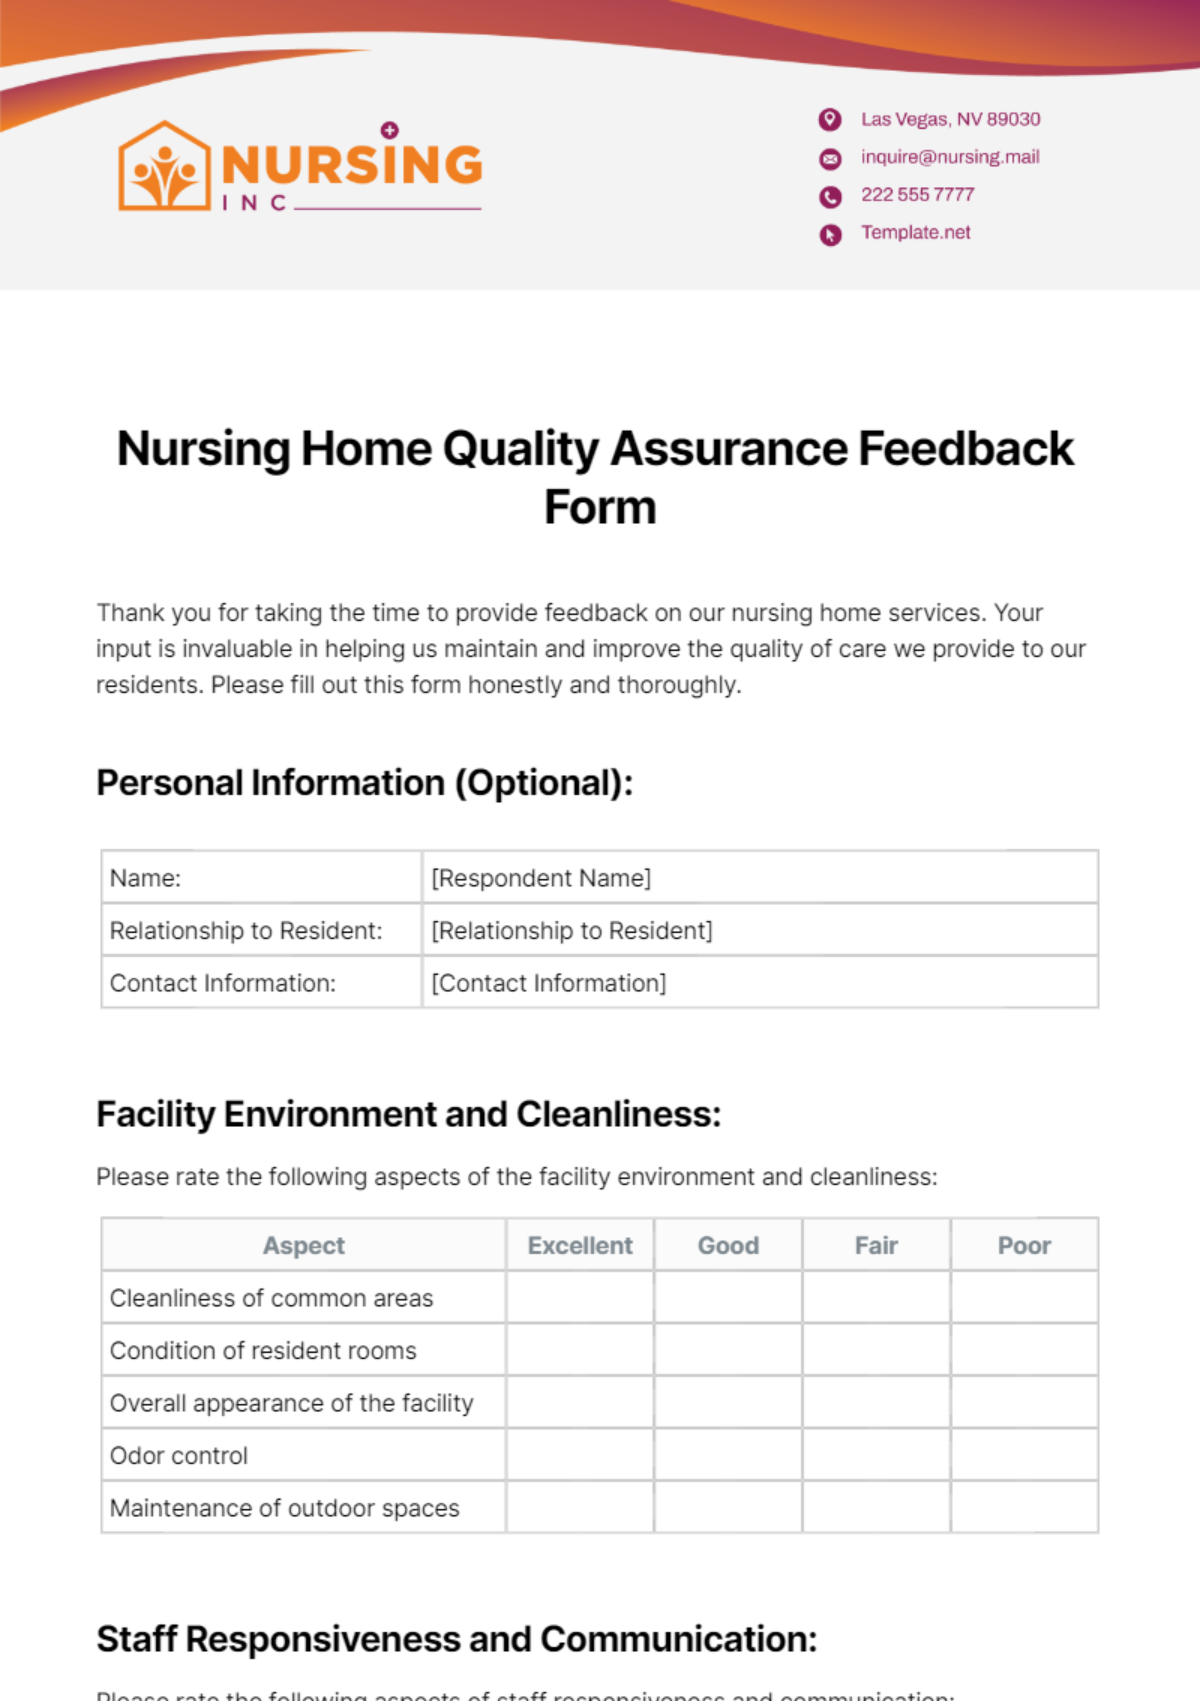 Nursing Home Quality Assurance Feedback Form Template